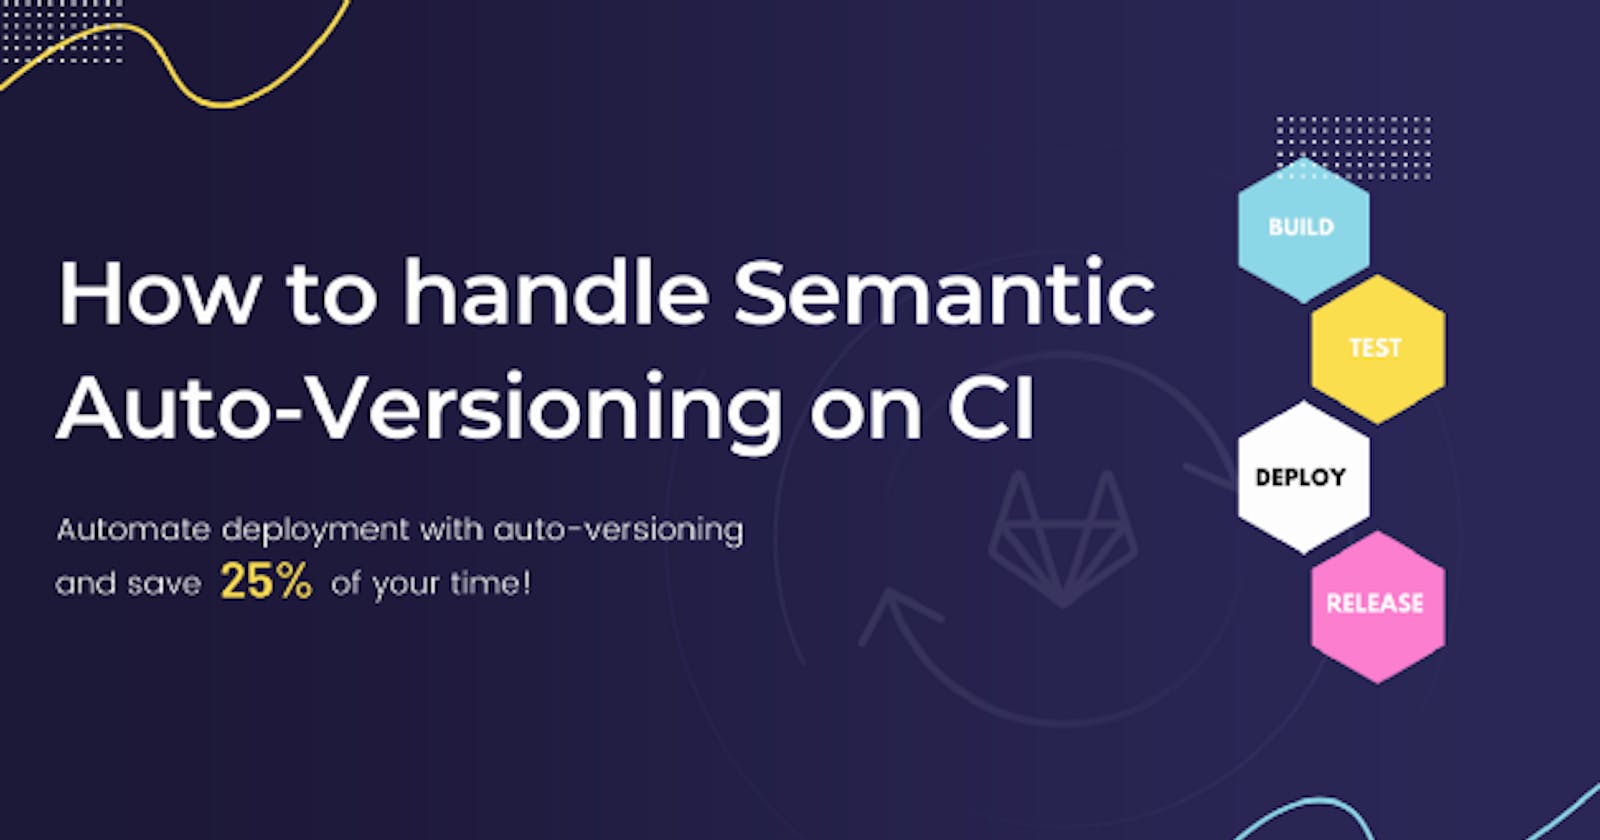 iOS — How to handle Semantic Auto-Versioning on CI